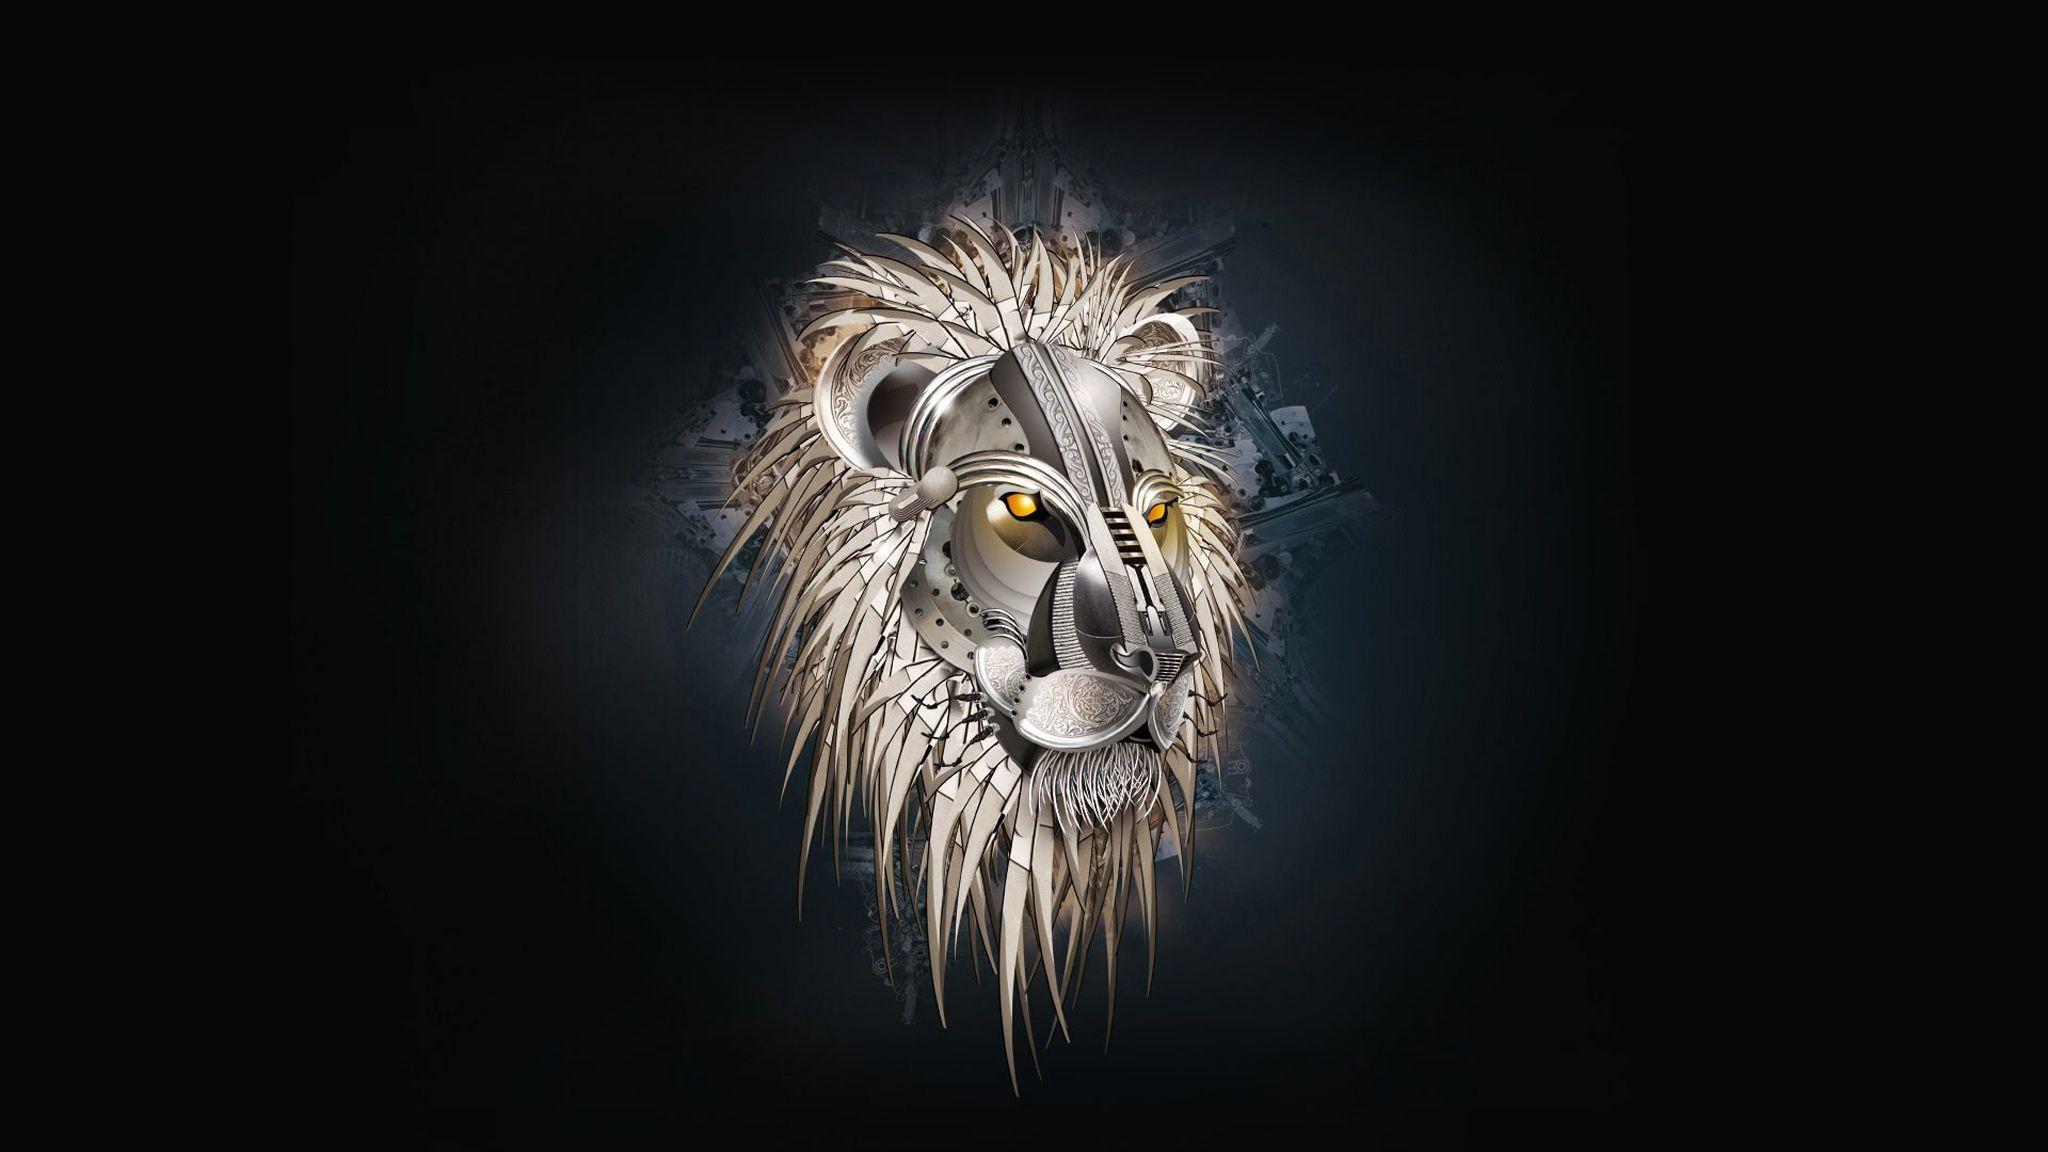 Abstract Lion HD Desktop Wallpaper, Instagram photo, Background